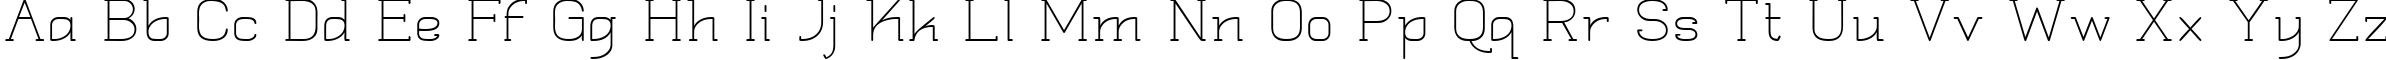 Пример написания английского алфавита шрифтом Quadlateral